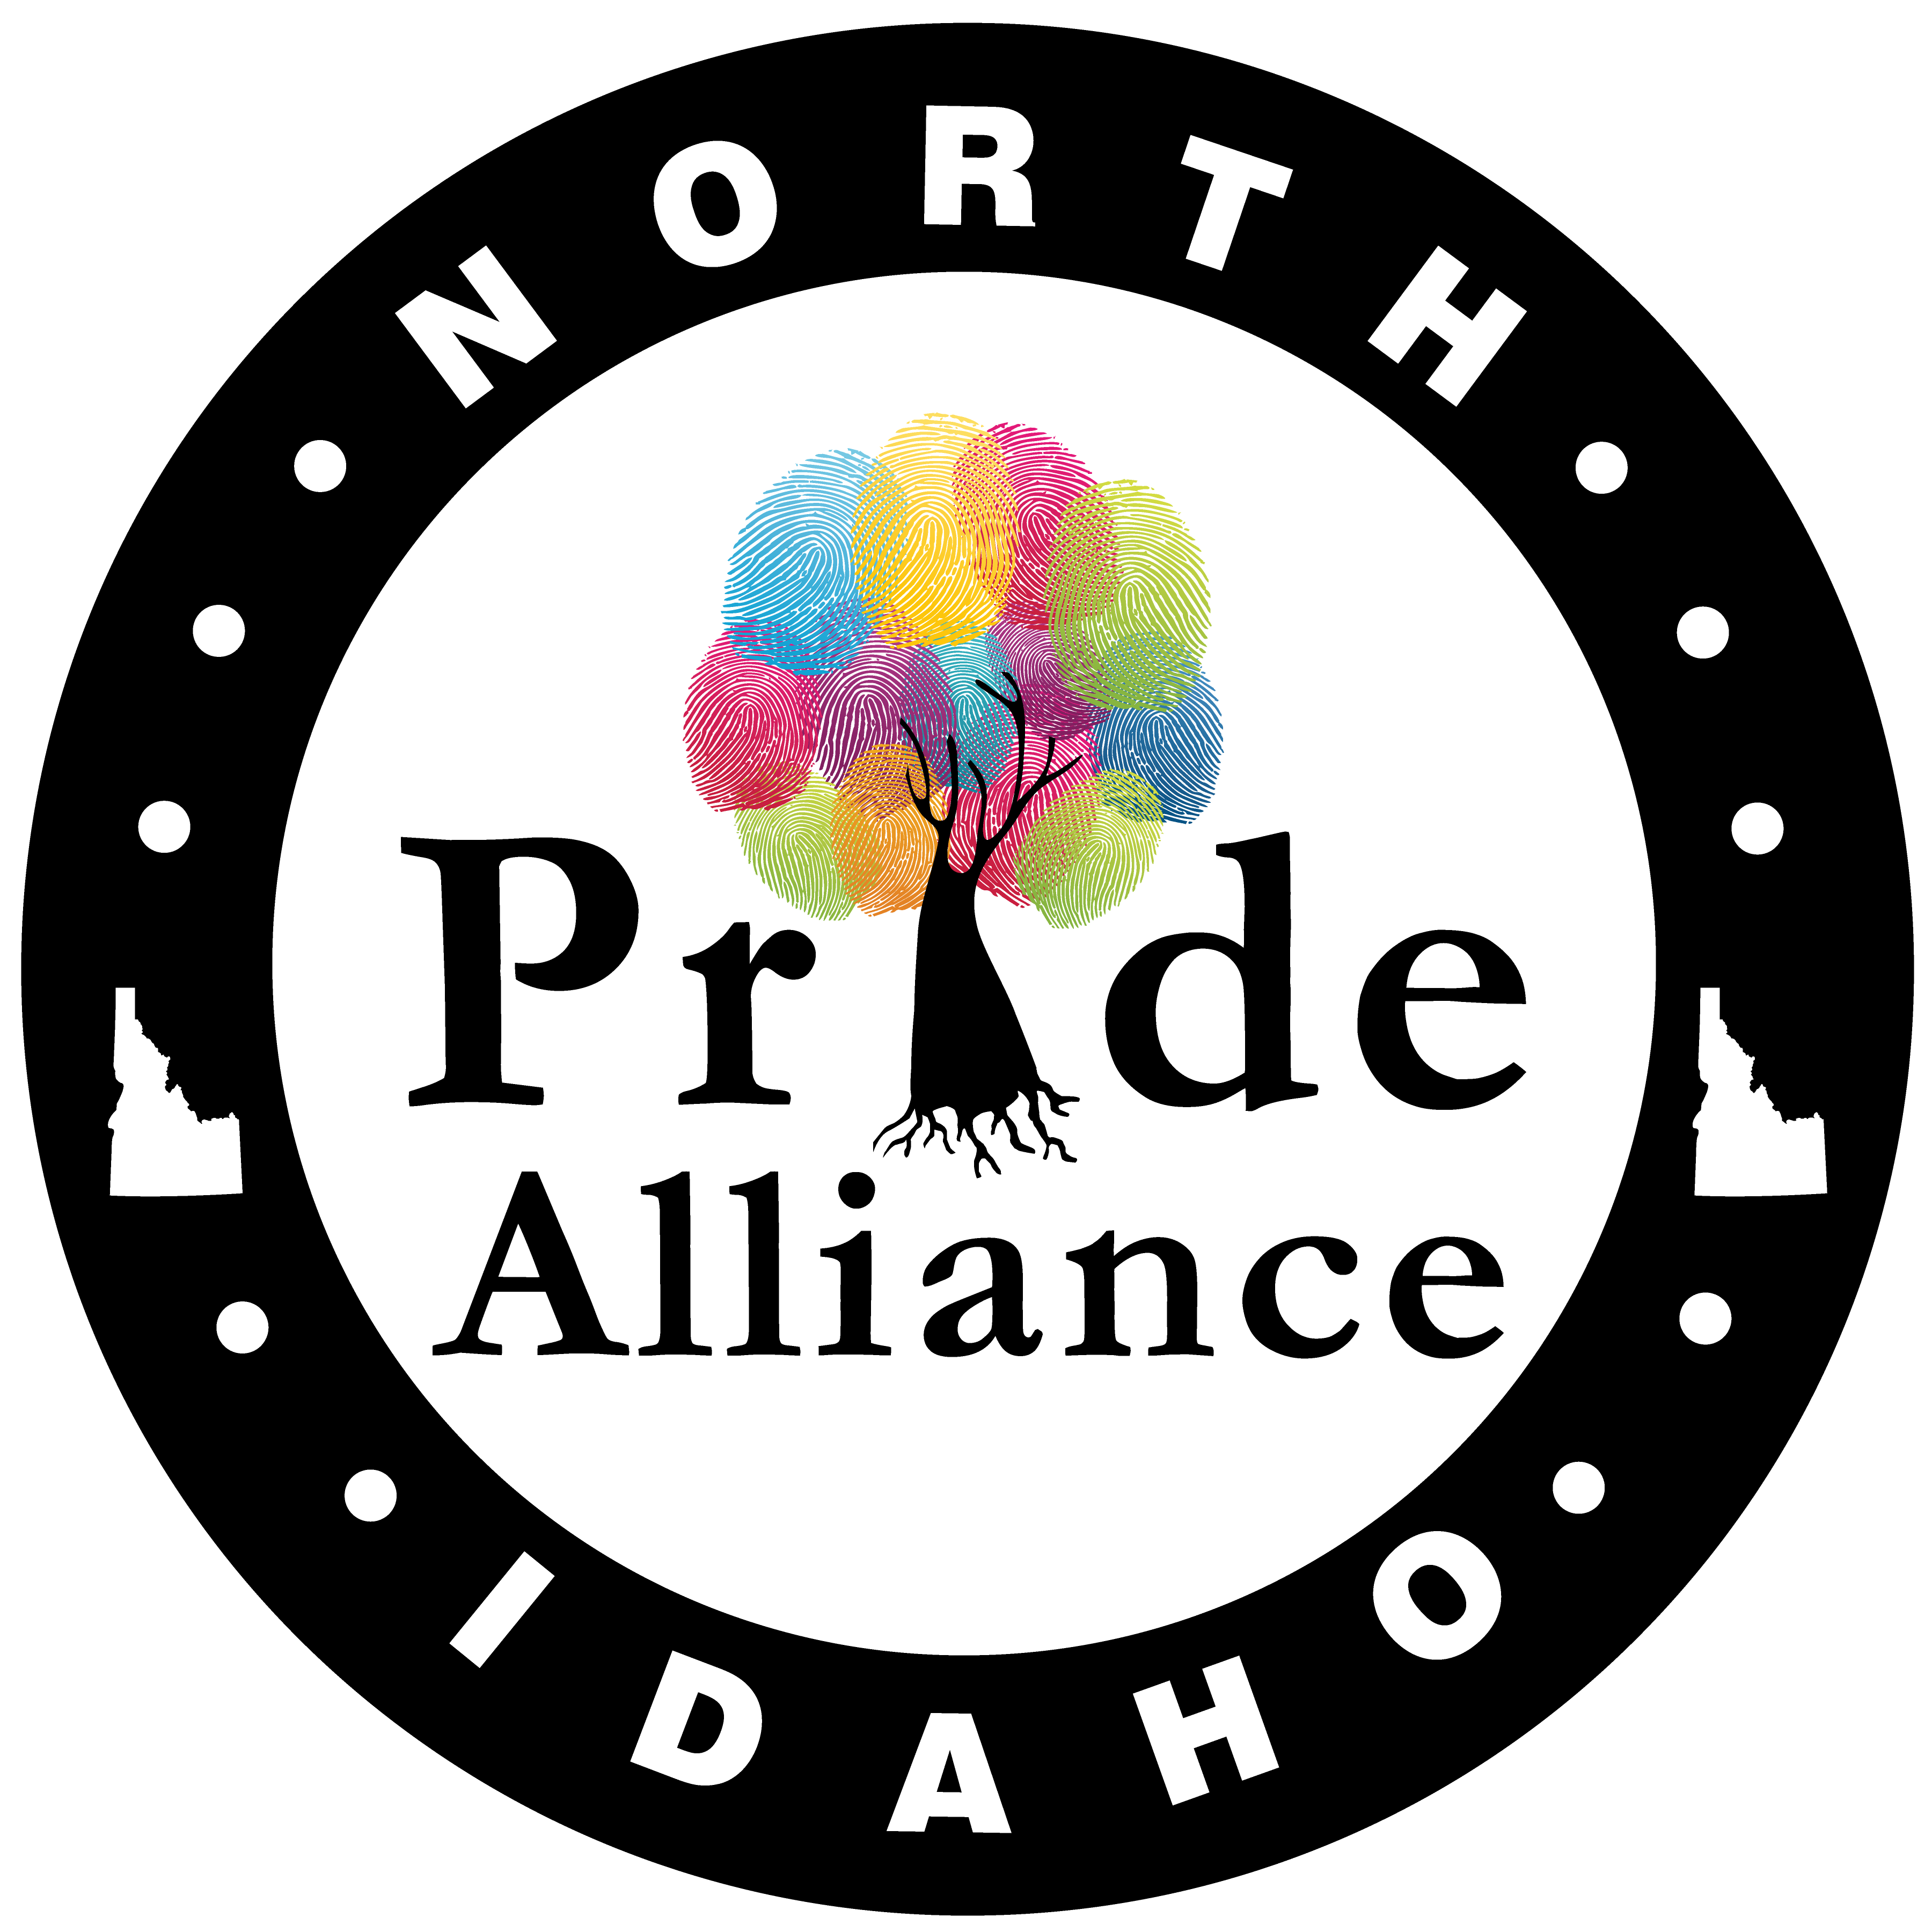 North Idaho Pride Alliance